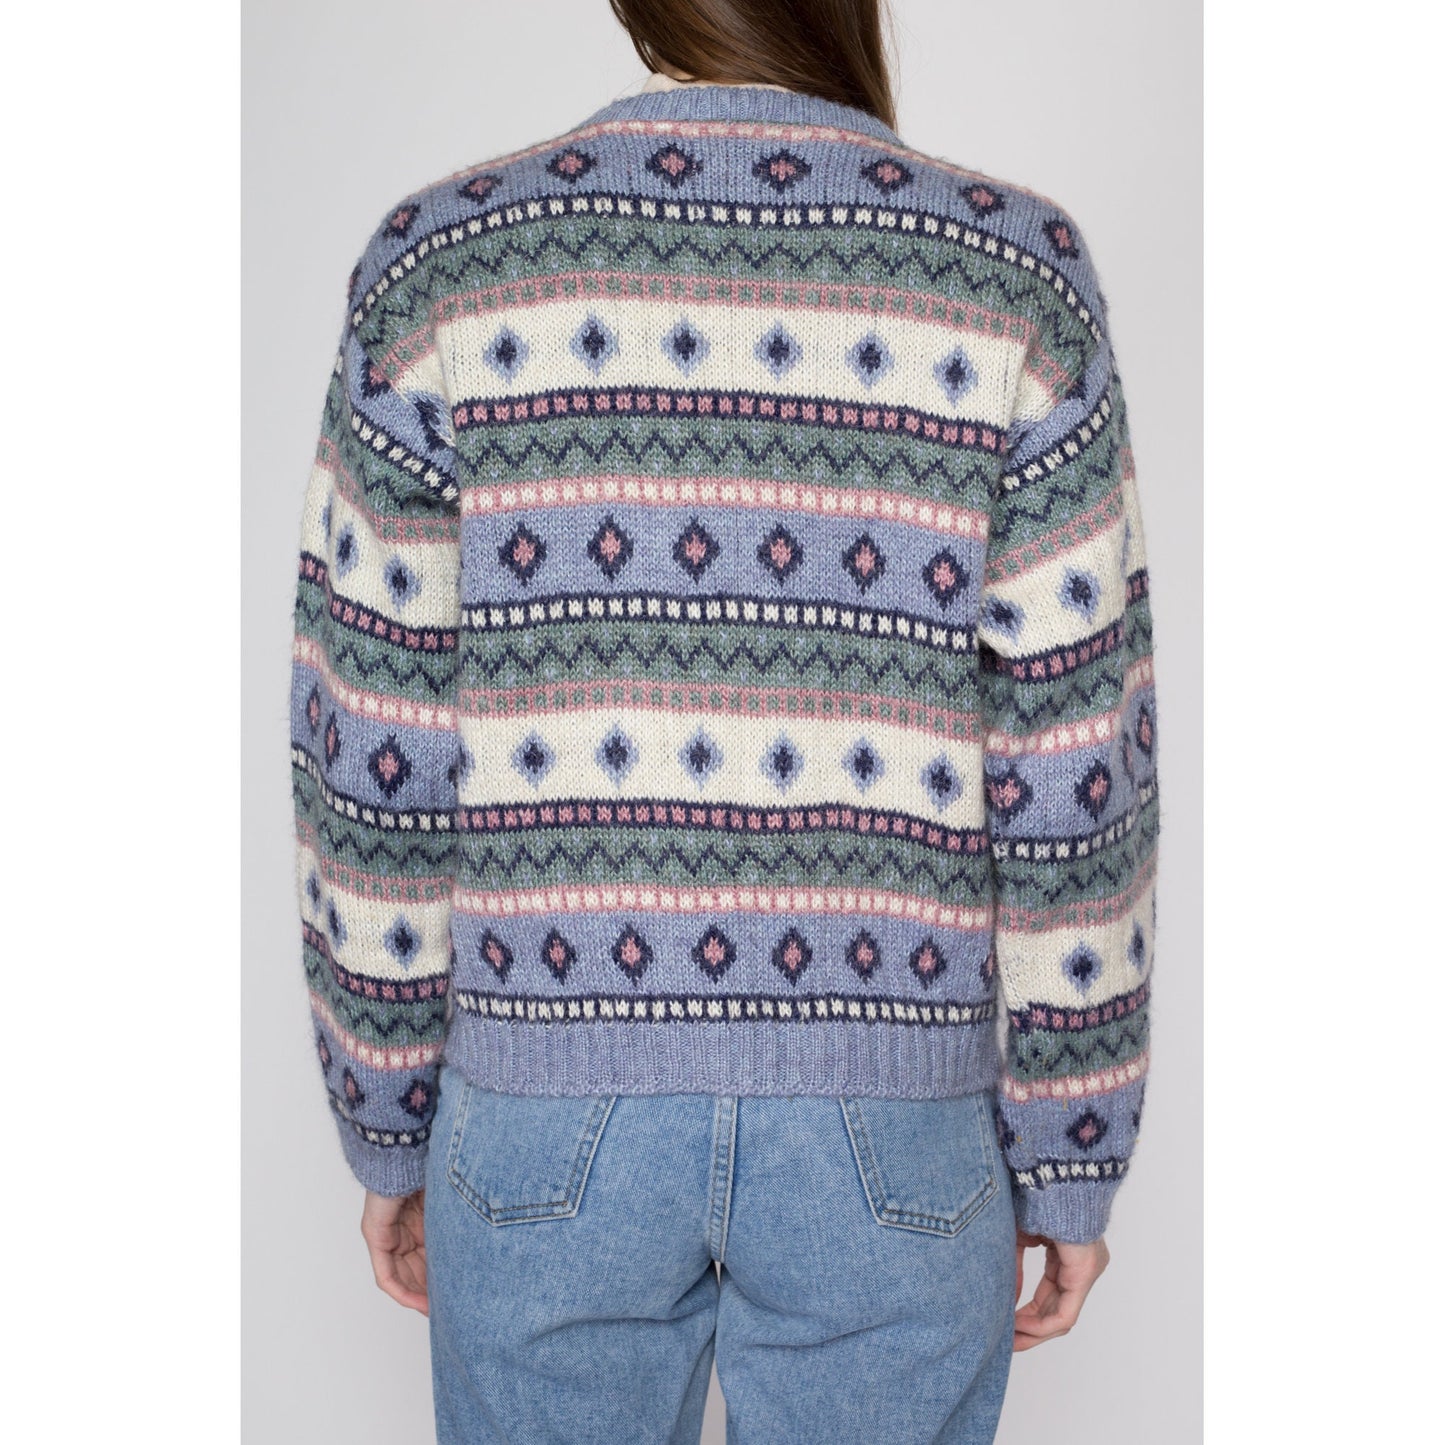 Medium 90s LL Bean Pastel Fair Isle Cardigan | Vintage Mohair Blend Button Up Striped Knit Sweater